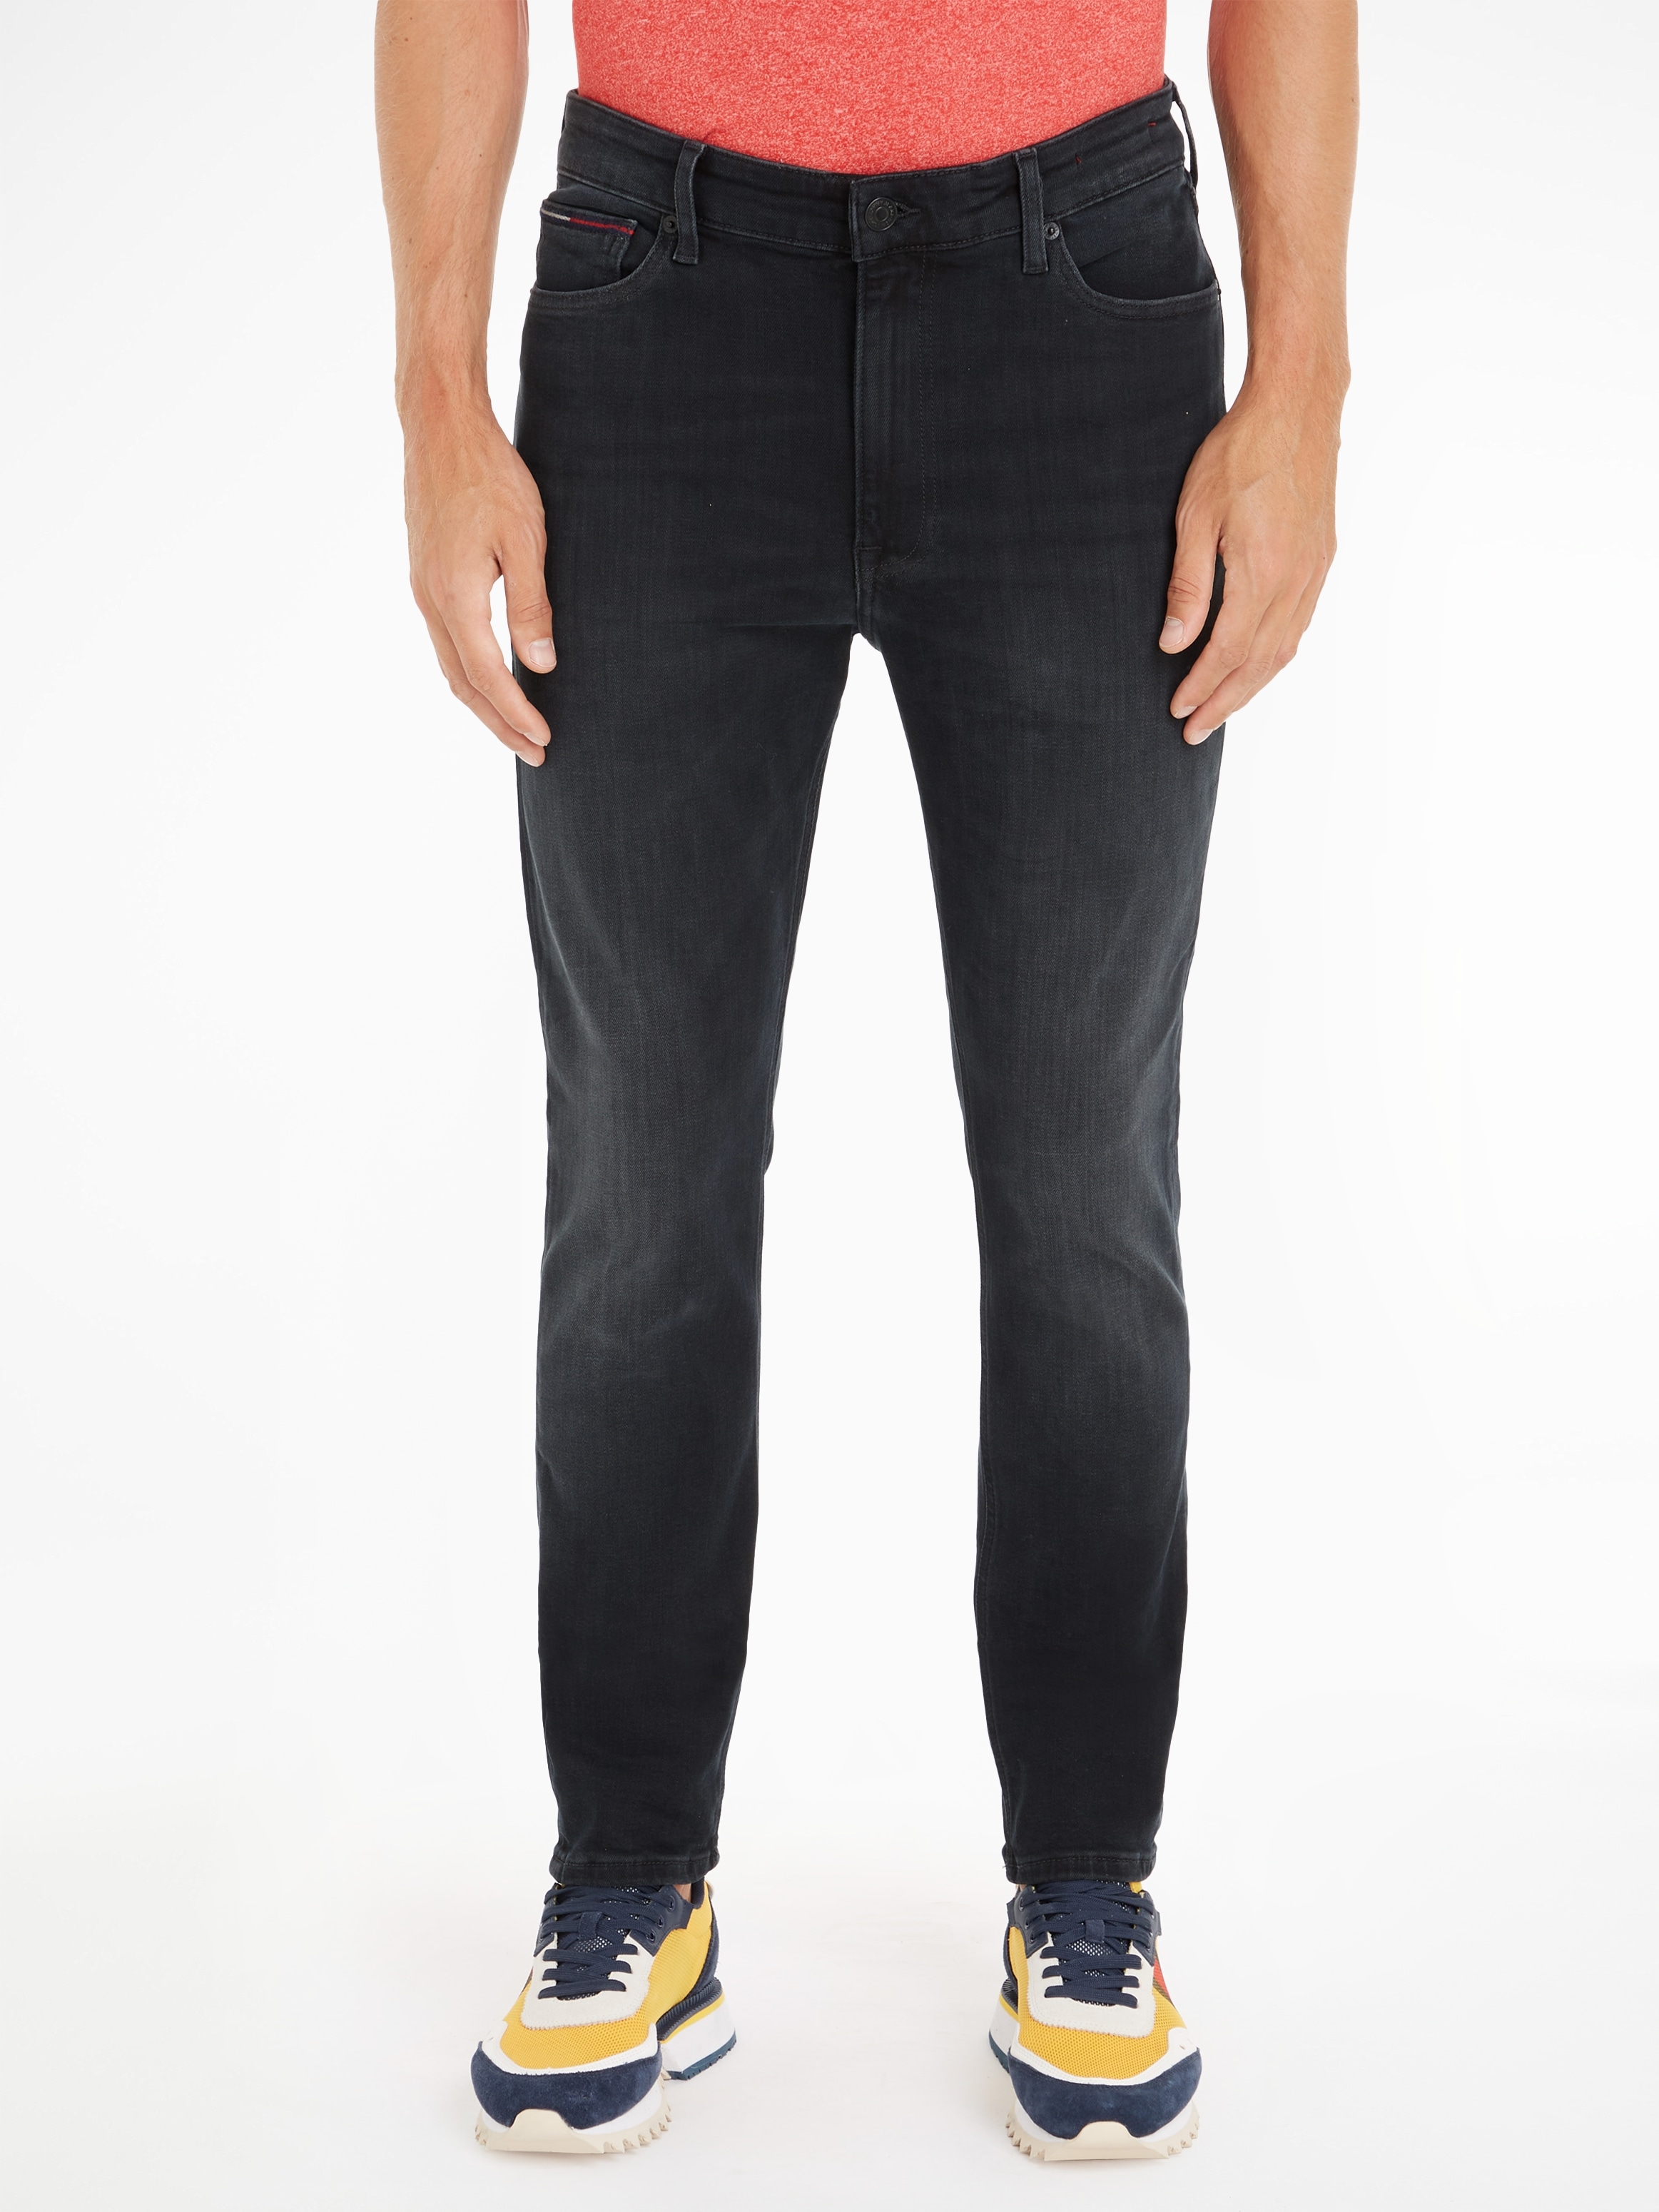 BG3384«, modischen in Waschungen »SIMON bei Jeans Skinny-fit-Jeans SKNY Tommy online